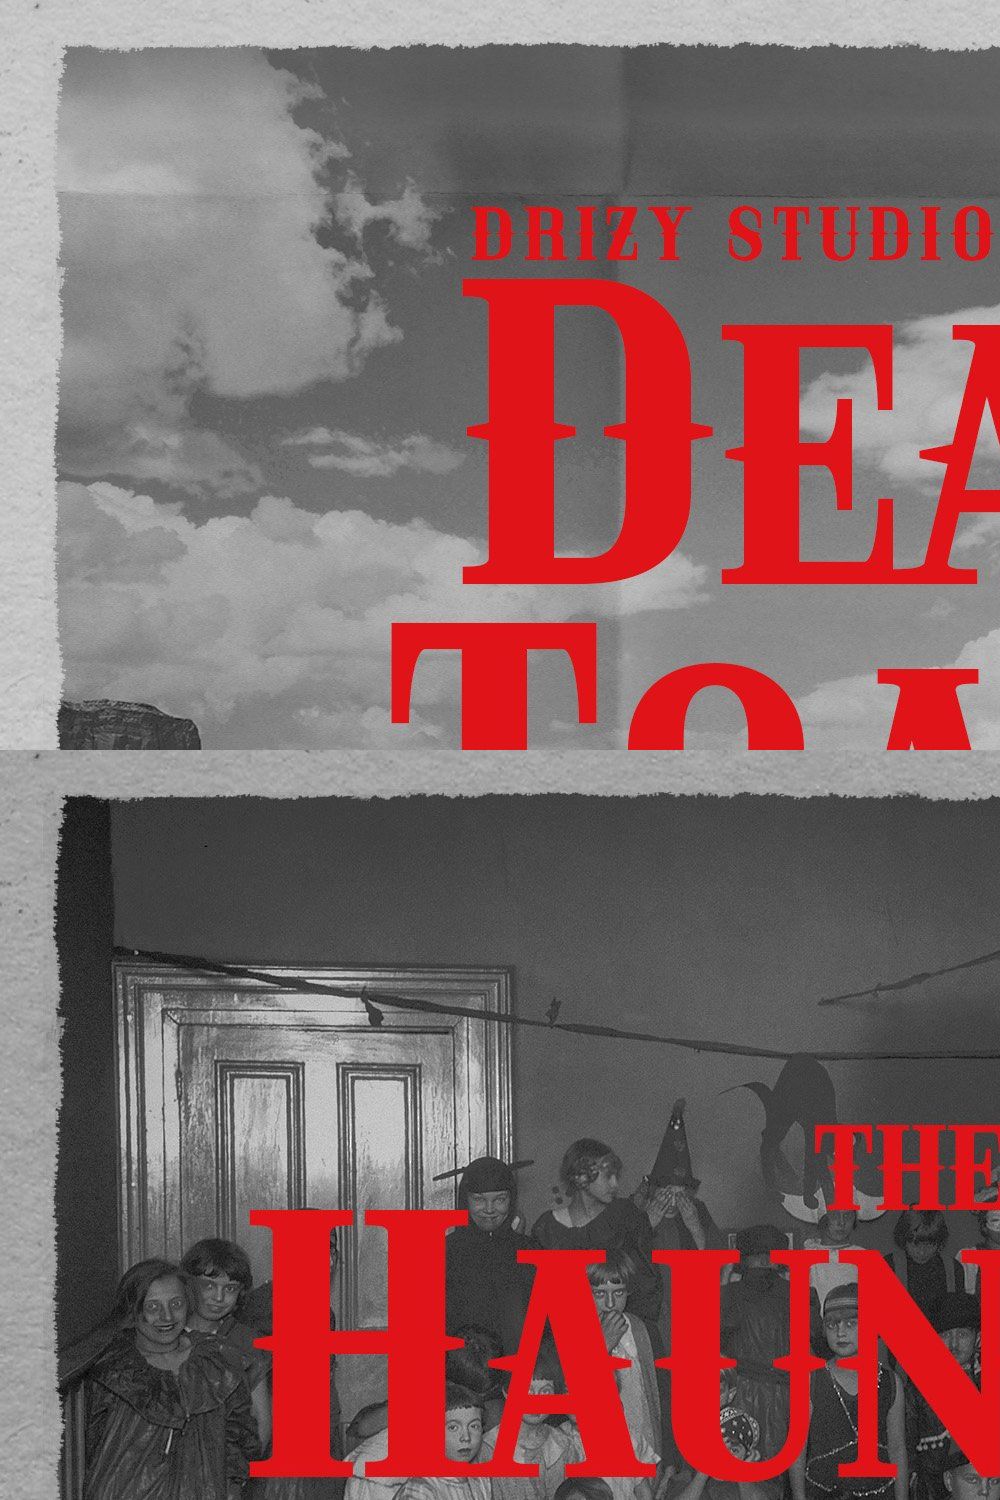 Deadtoast - Deadly Halloween Font pinterest preview image.